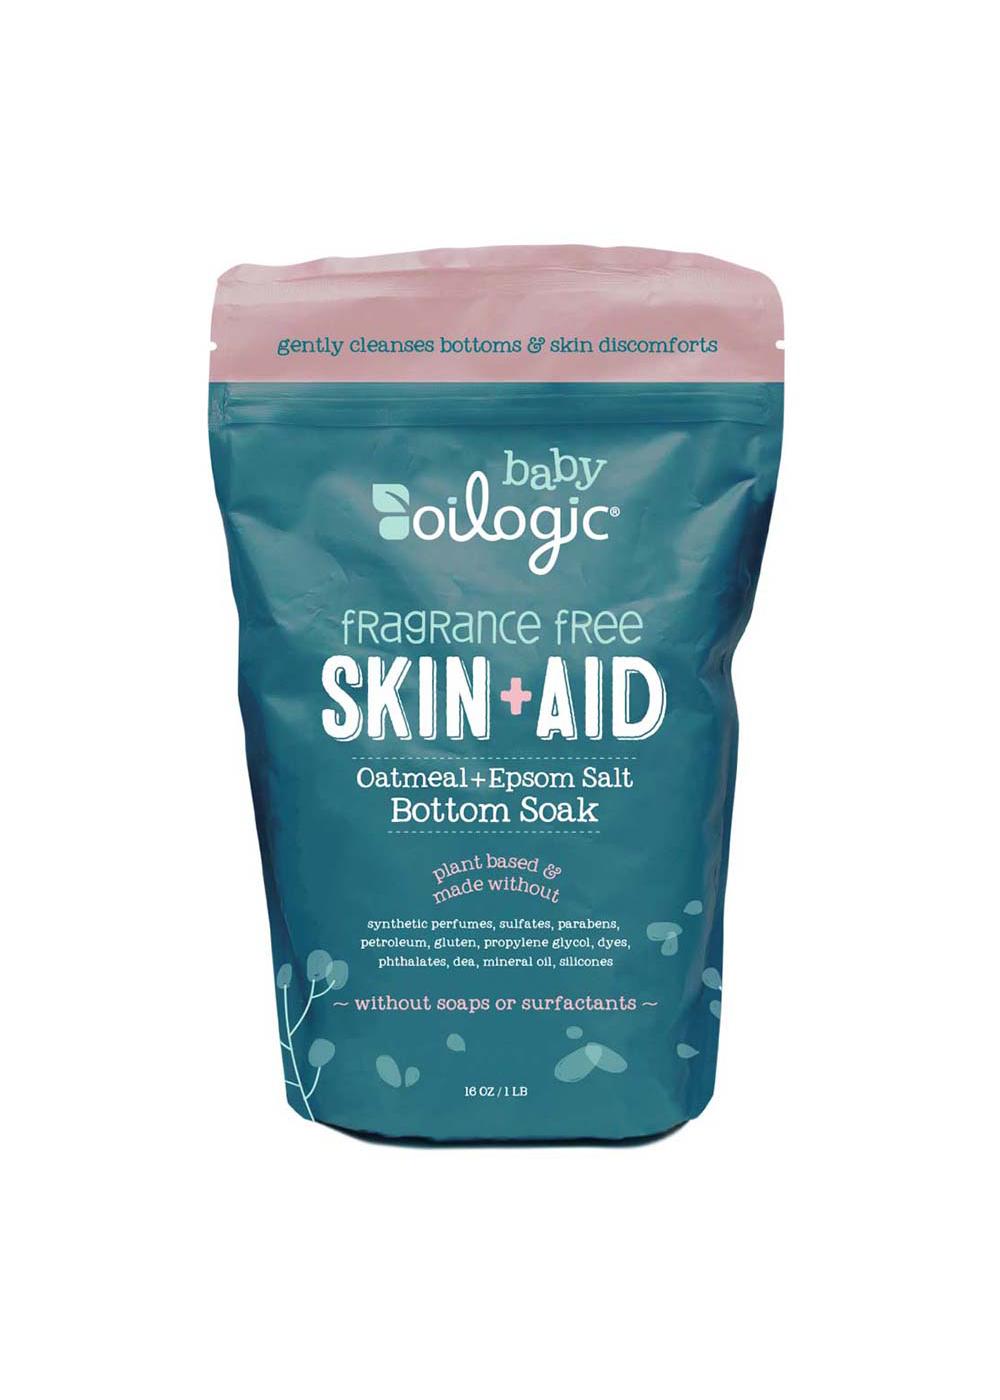 Oilogic Baby Skin + Aid Bottom Soak - Fragrance Free; image 1 of 2